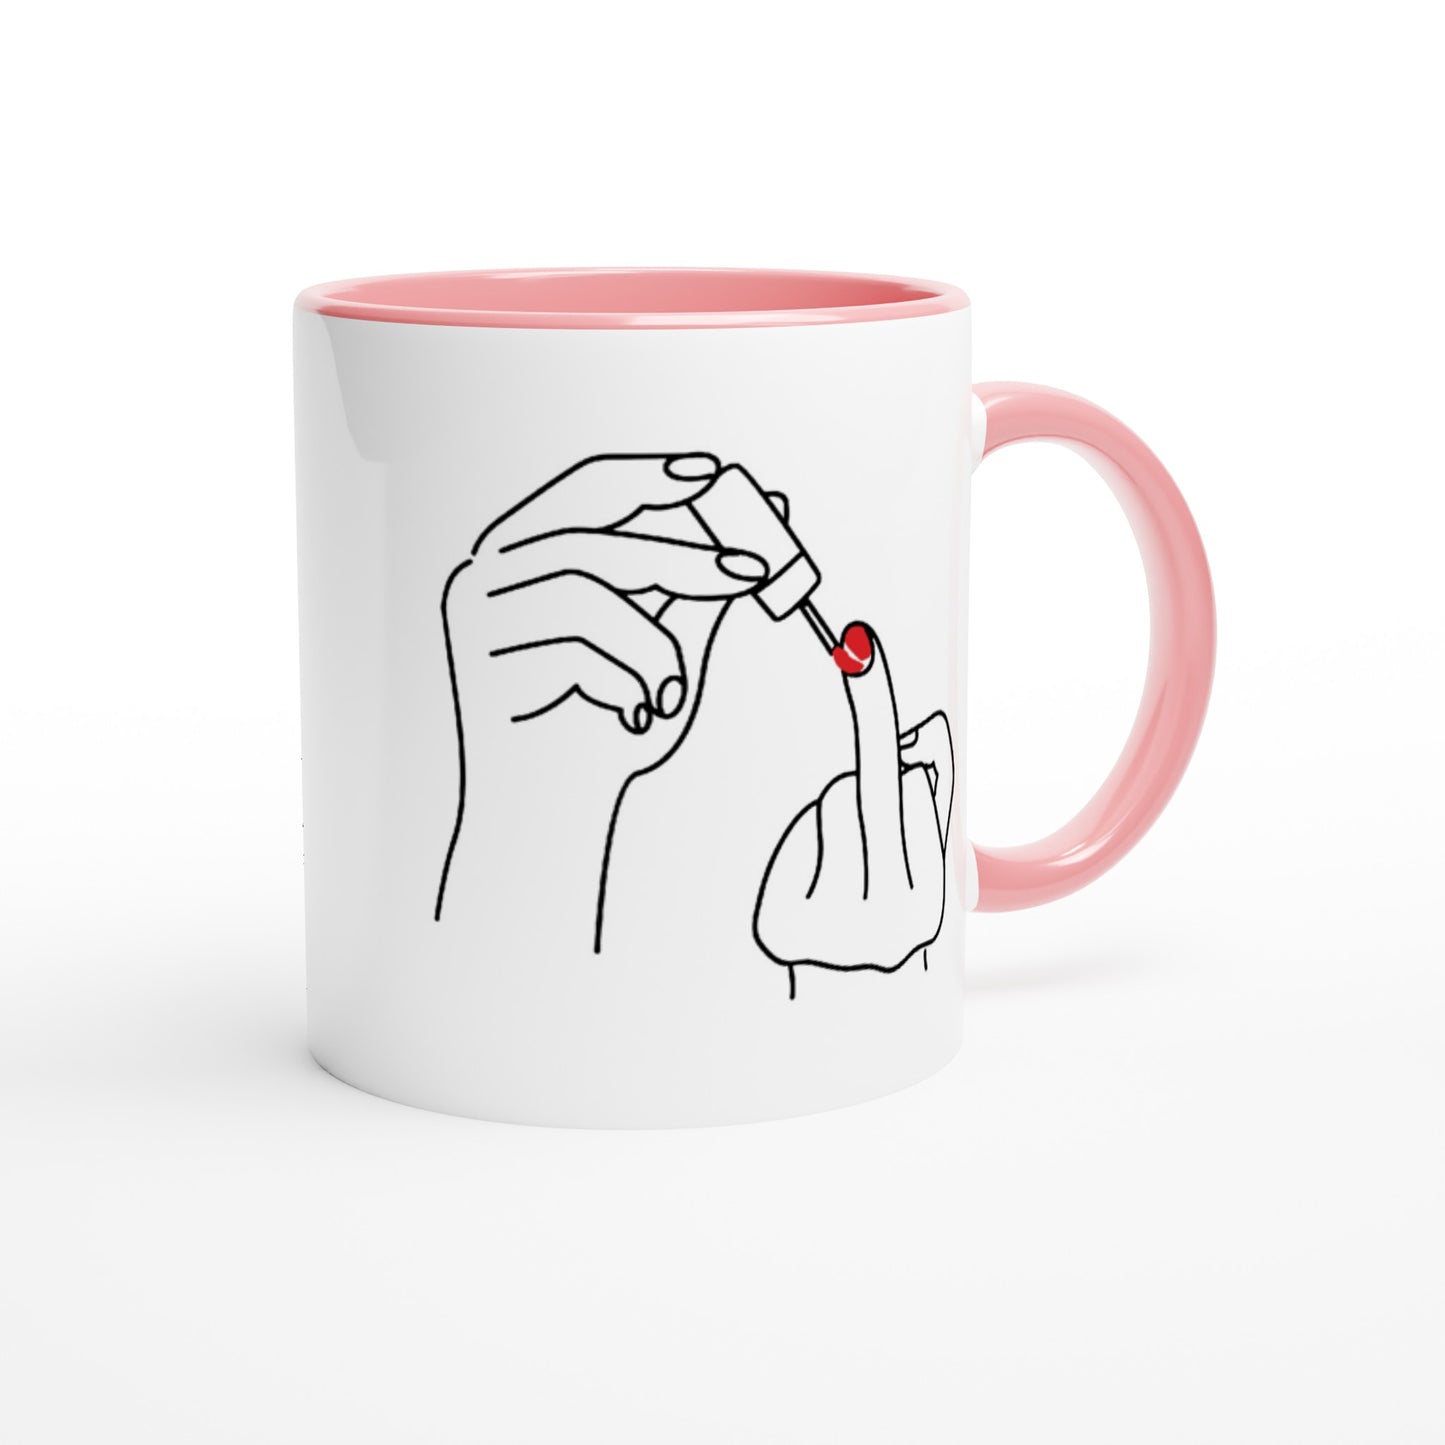 Ladylike Middle Finger - White 11oz Ceramic Mug with Color Inside